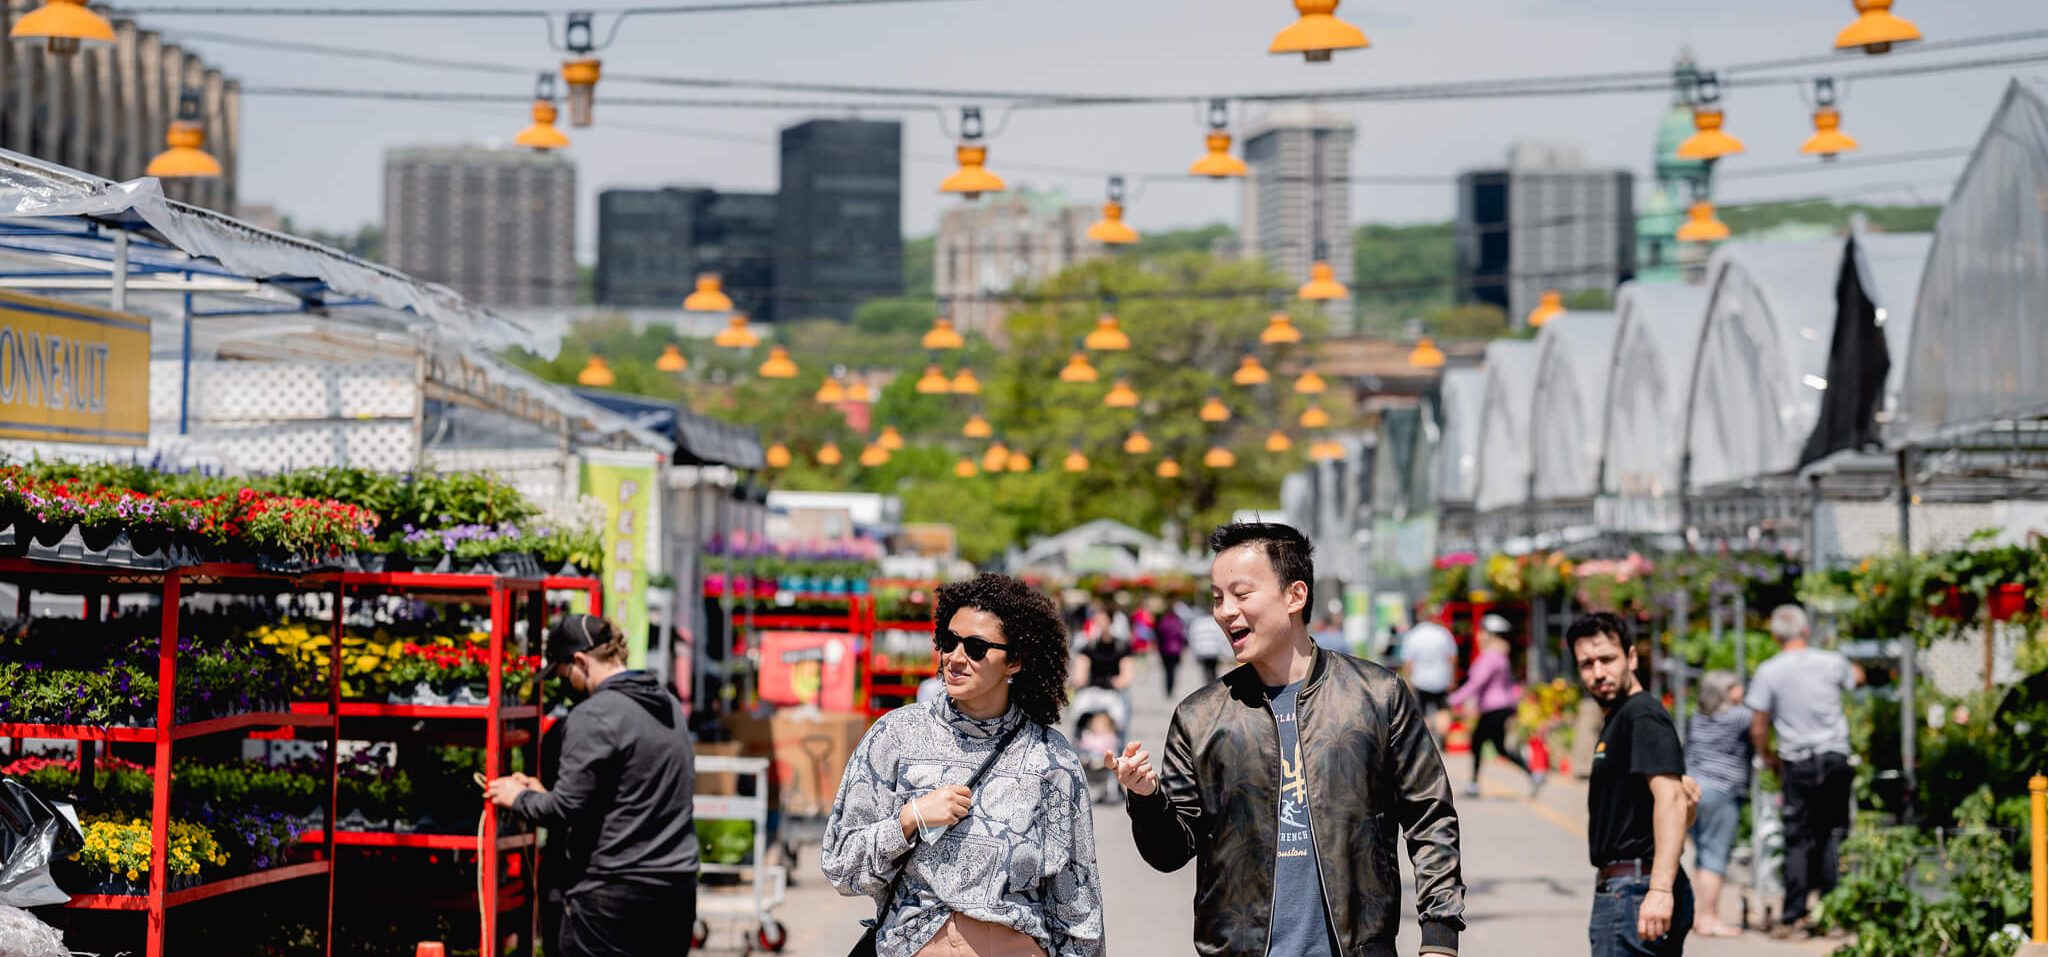 Montreal's Public Markets Launch Their Summer Season !